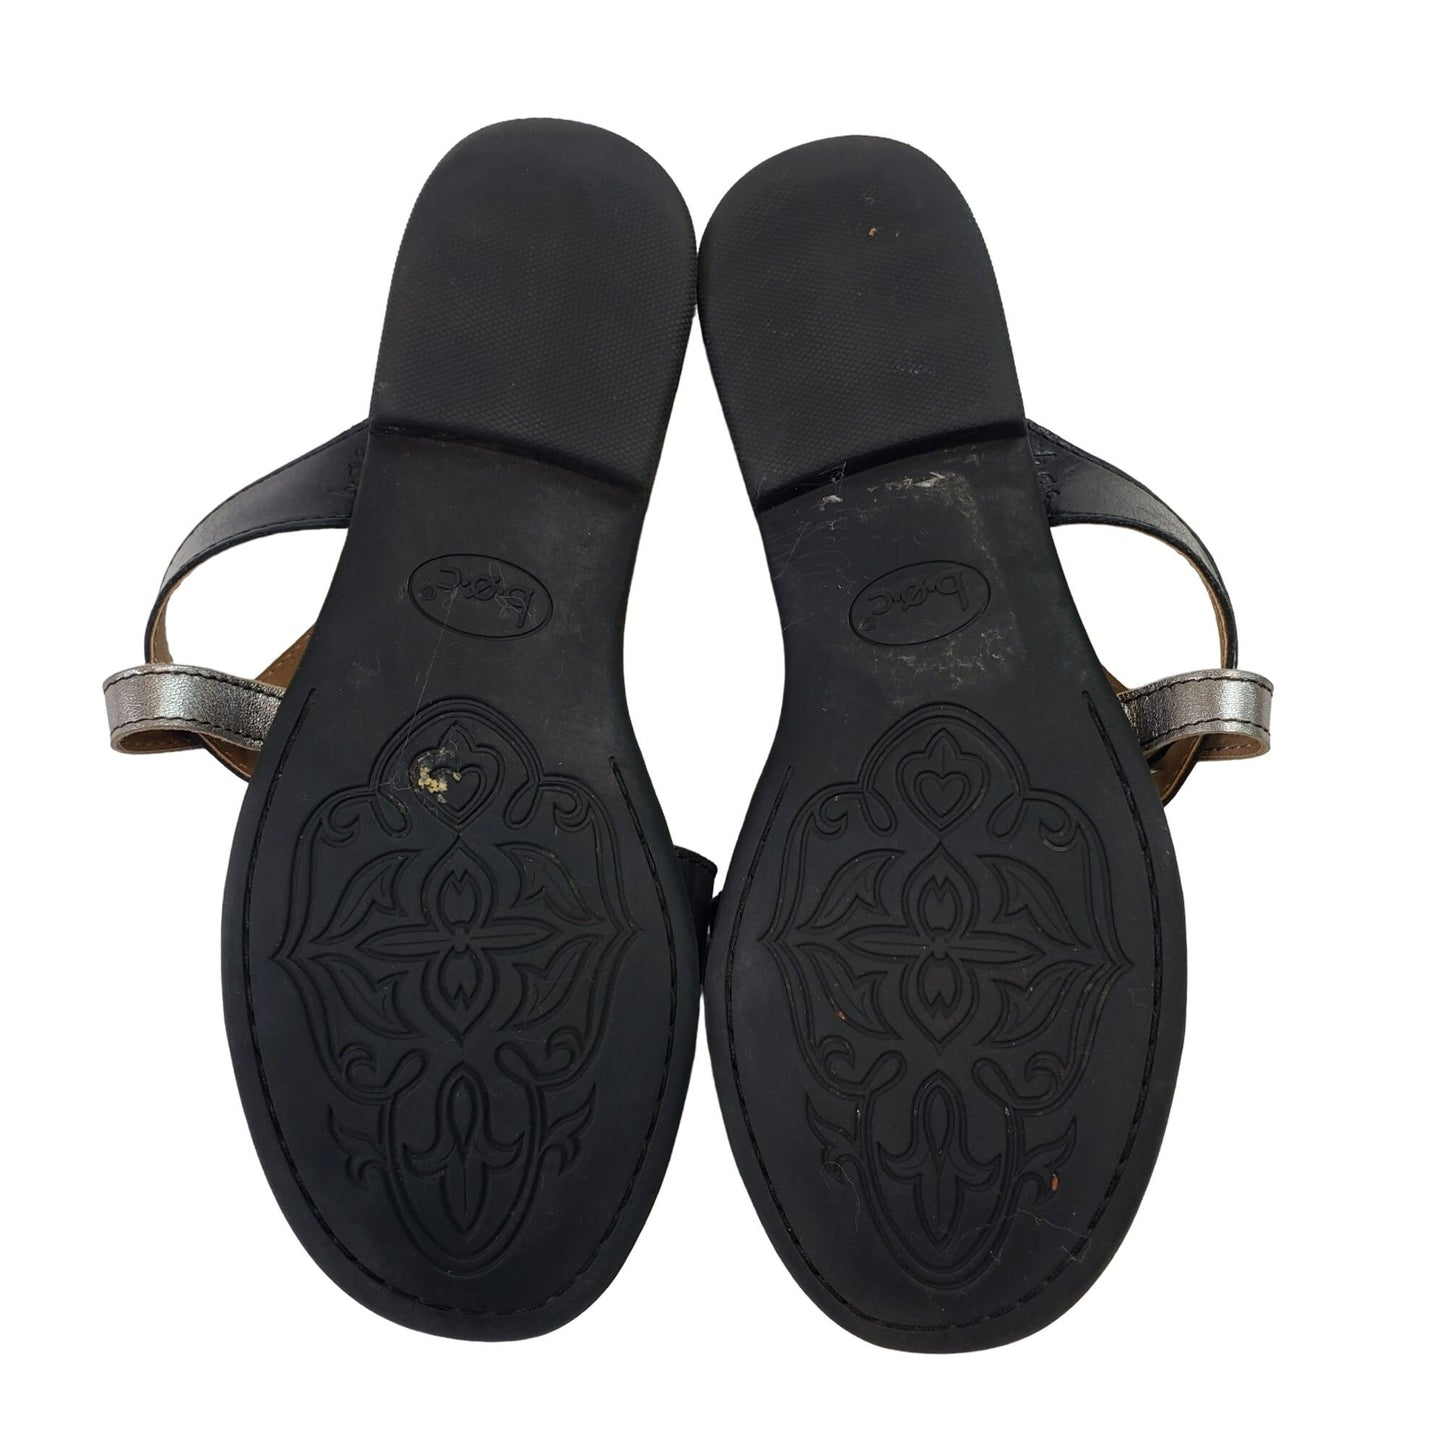 B.O.C. Born Leather Strappy Metallic Sandals Size 9